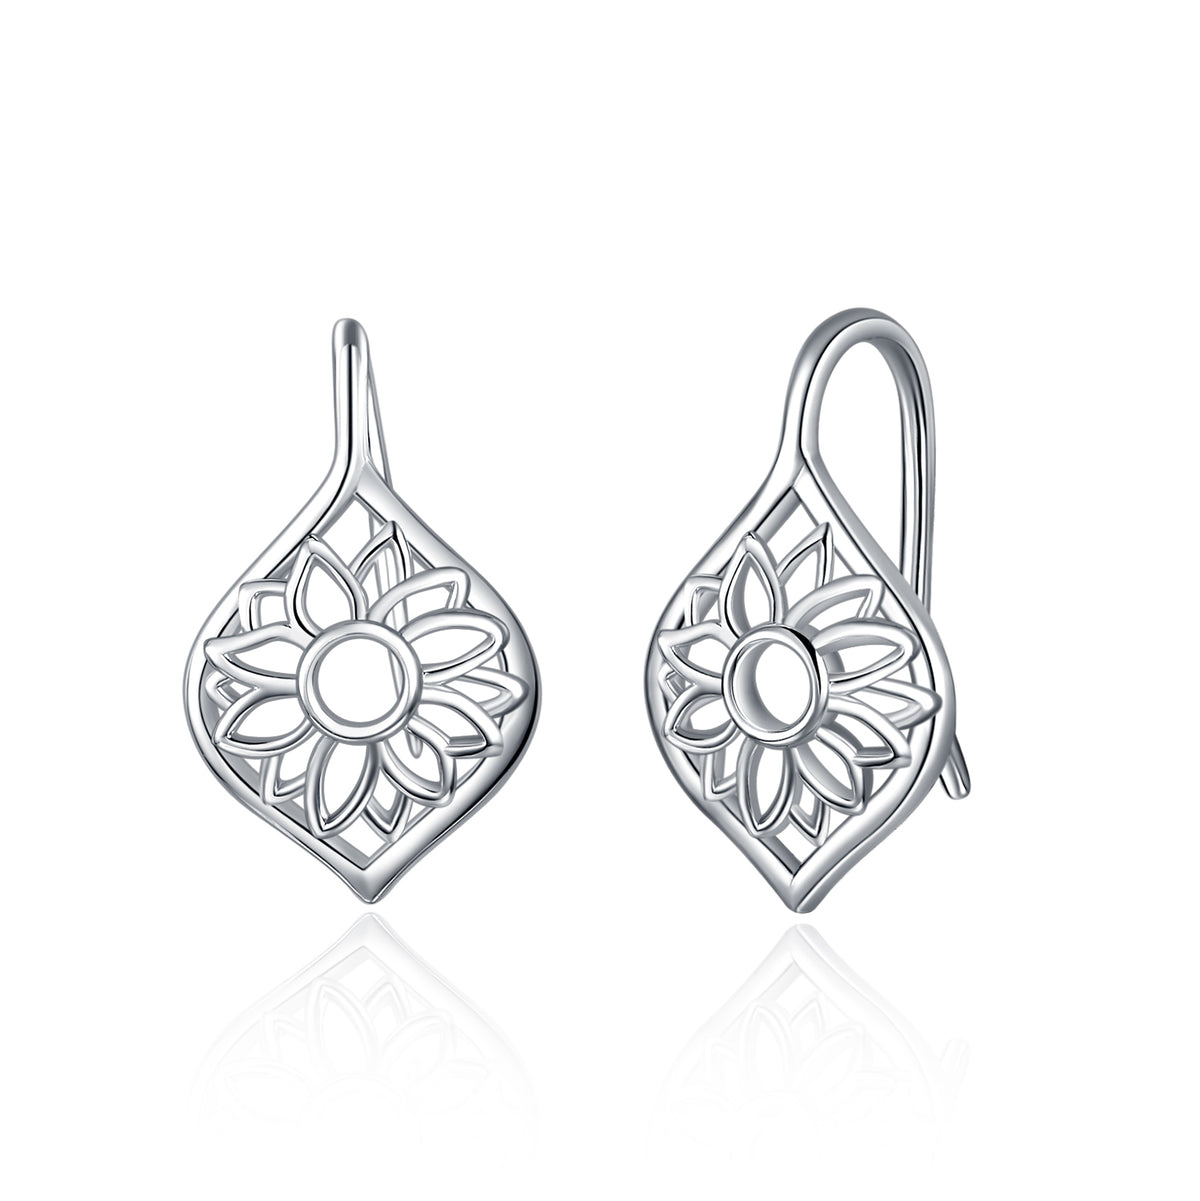 Flower Sterling Silver Earrings Jewelry for Women Teens Birthday Gifts Angelwarriorfitness.com